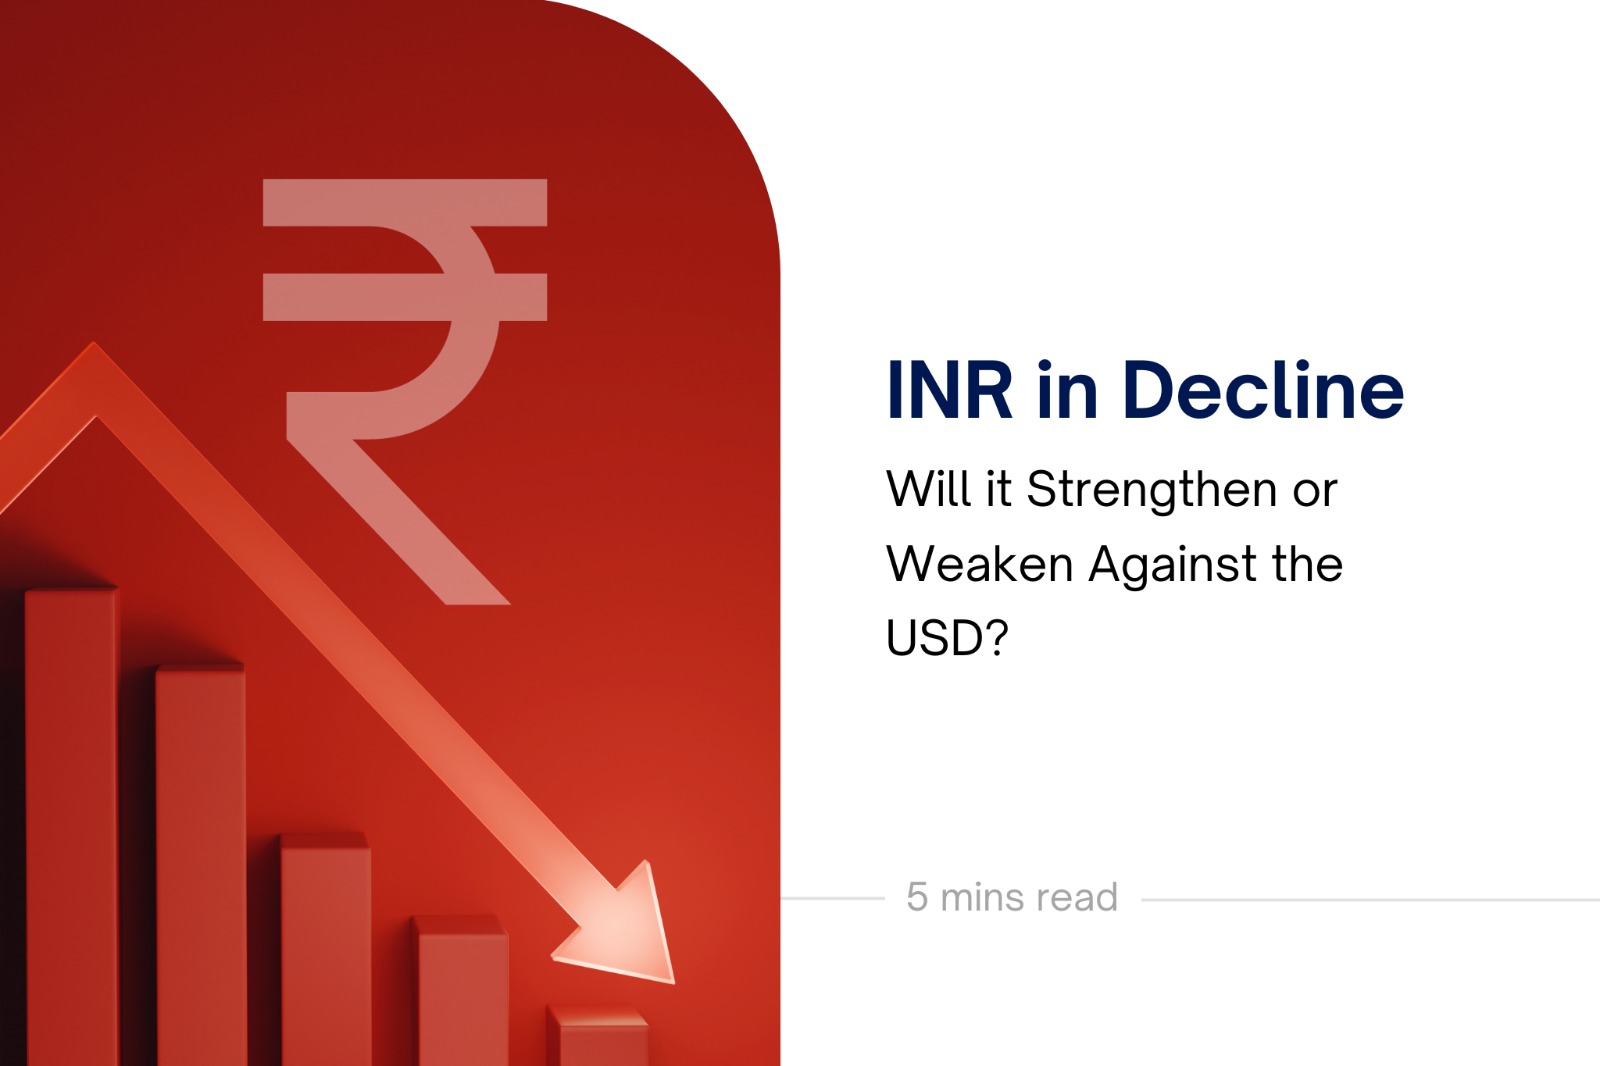 INR in Decline: Will it Strengthen or Weaken Against the USD